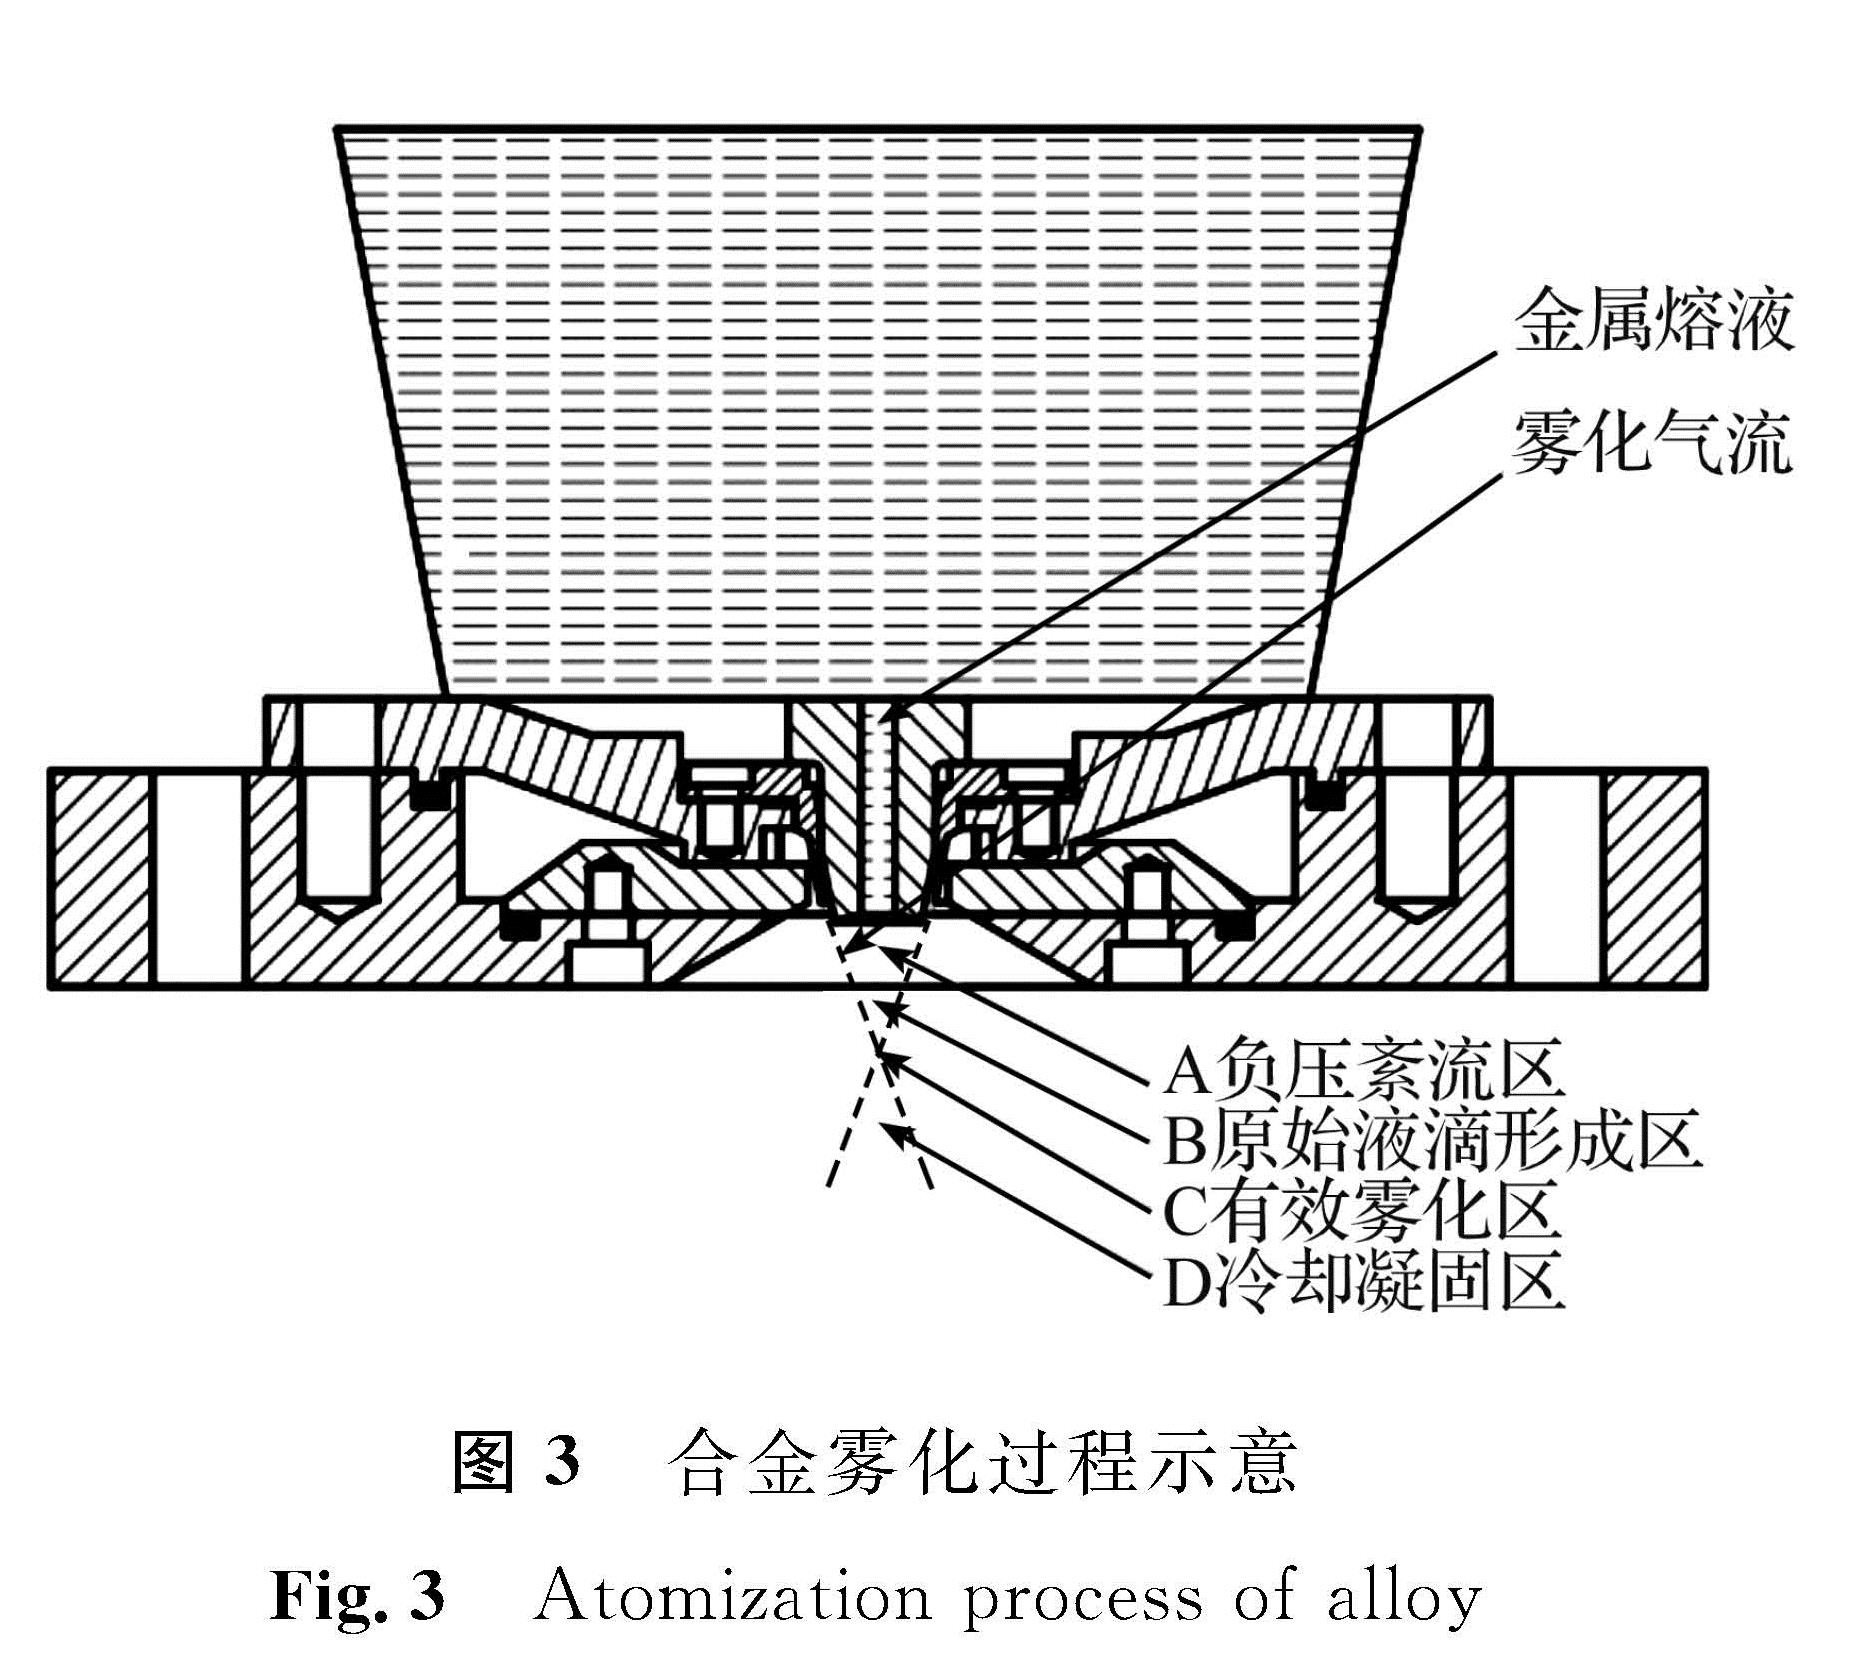 图3 合金雾化过程示意<br/>Fig.3 Atomization process of alloy